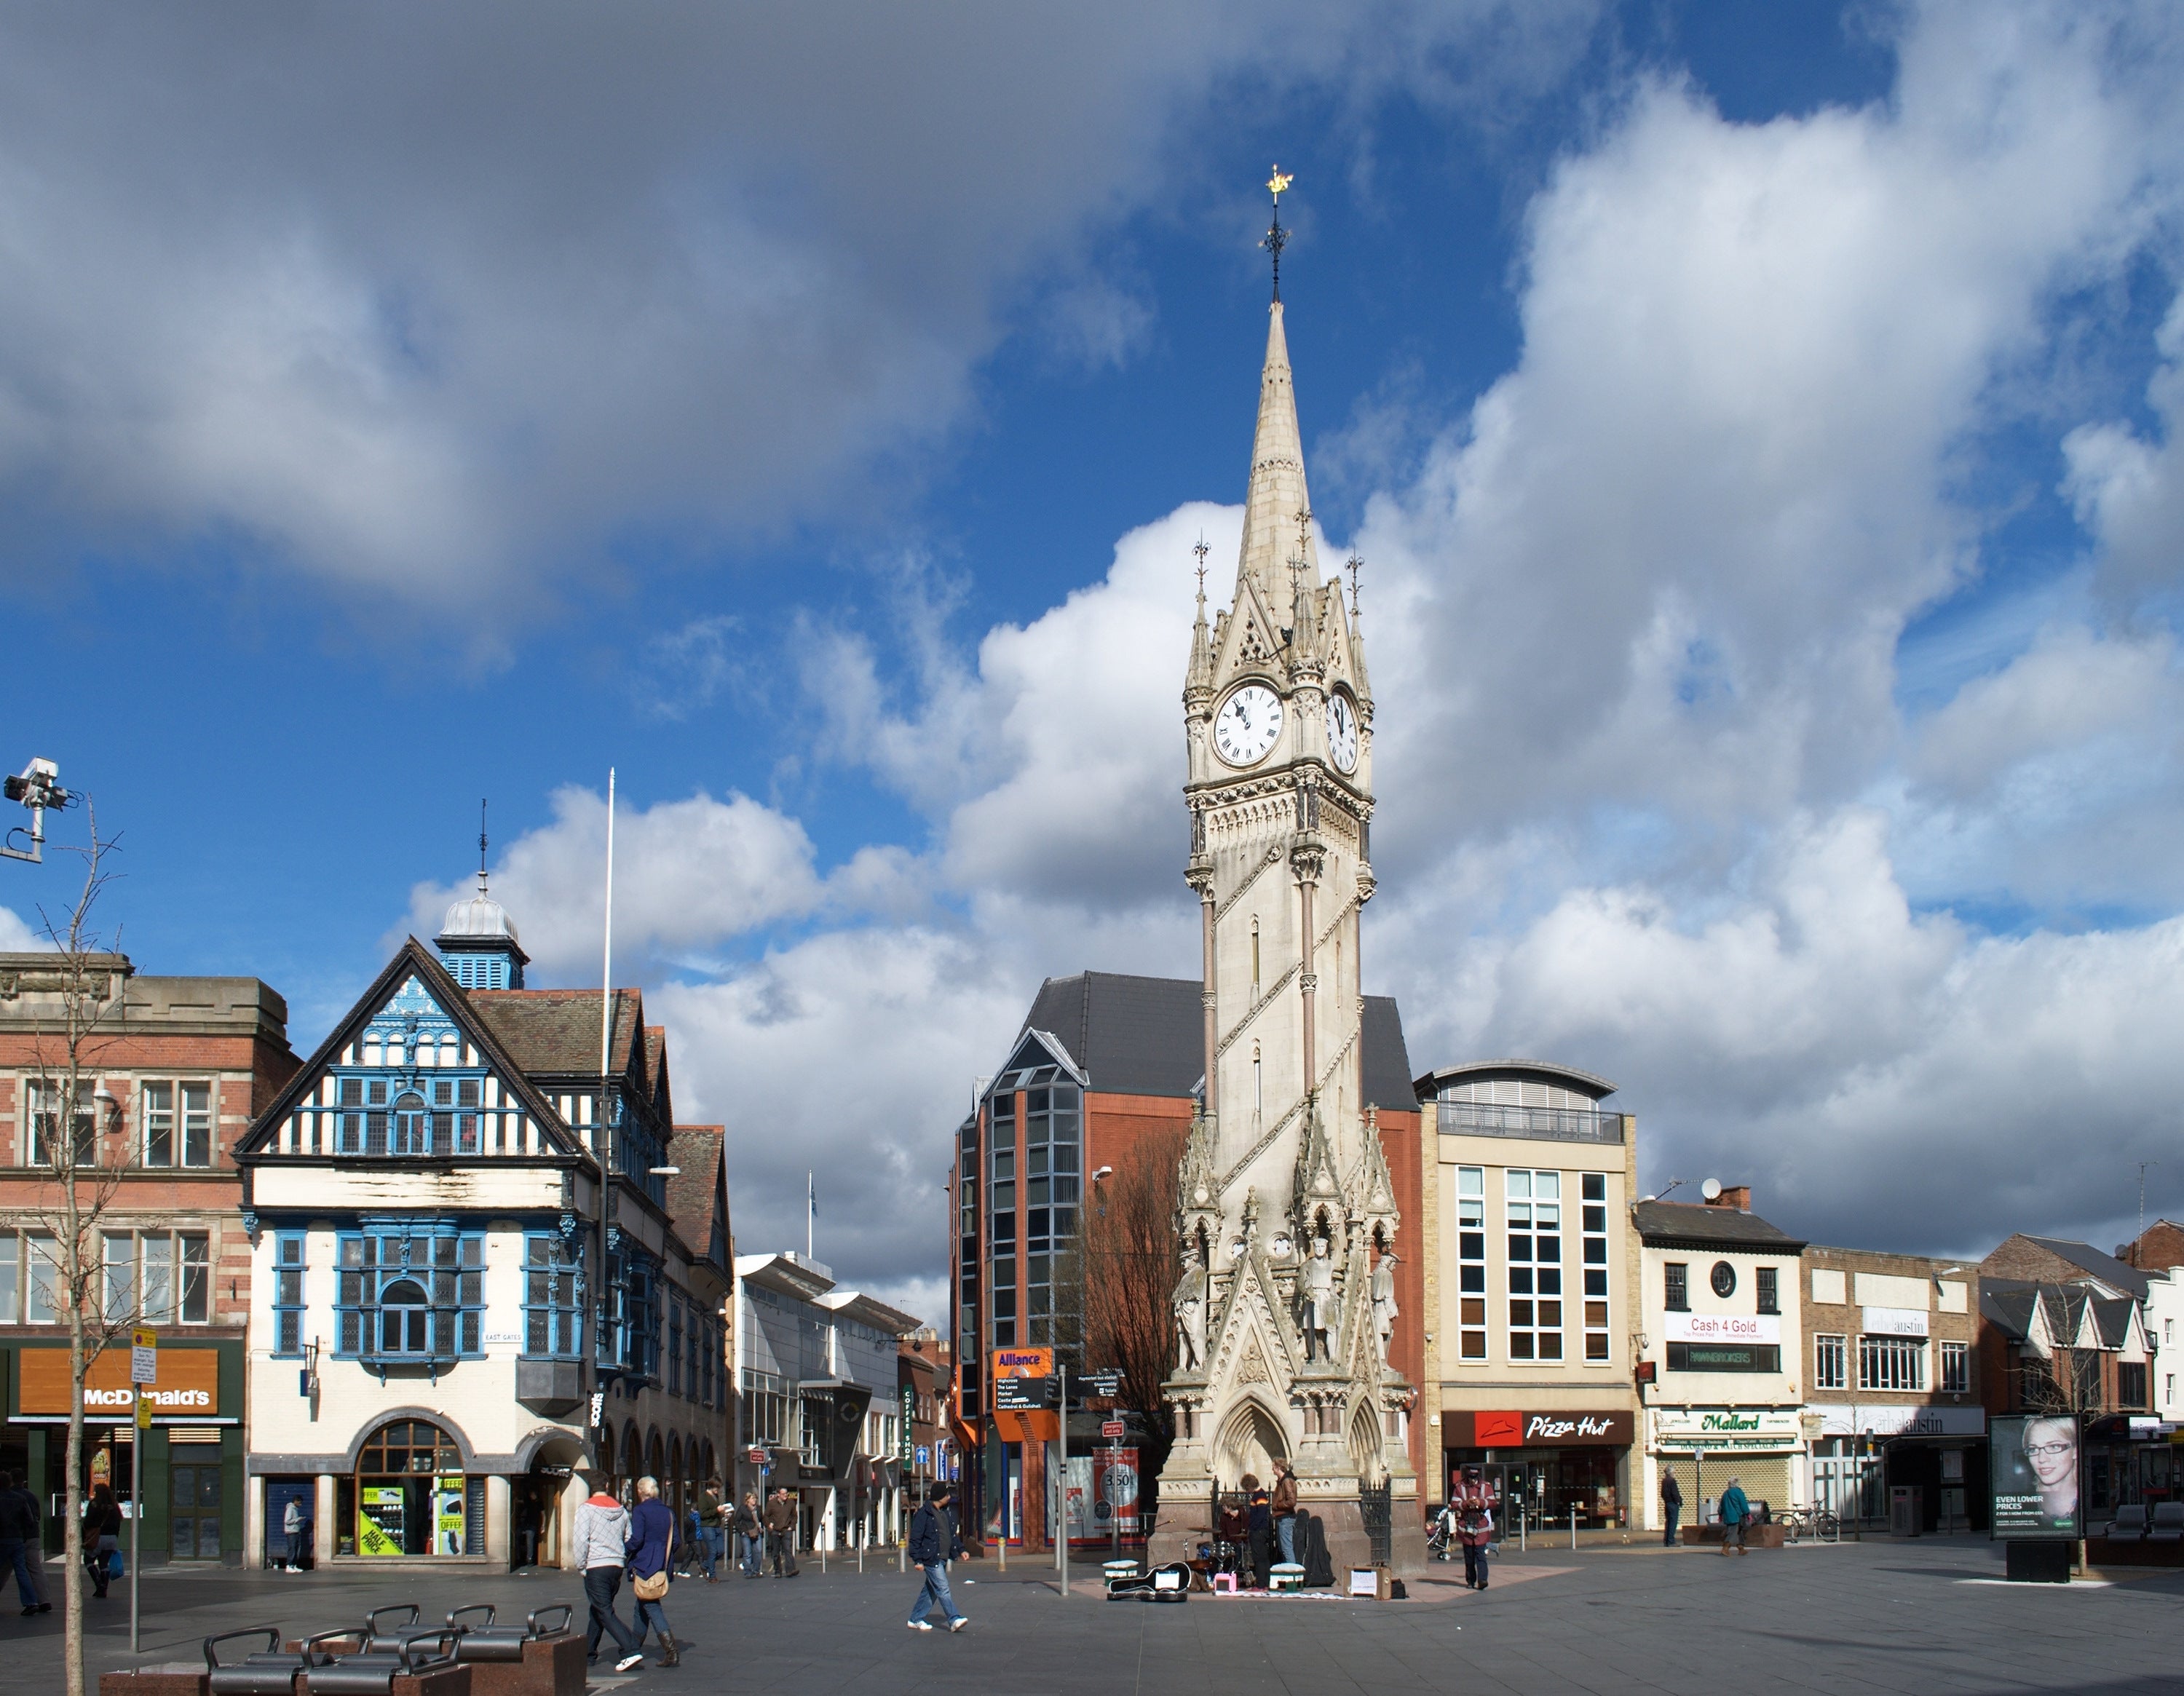 Leicester's Haymarket Memorial Clock Tower